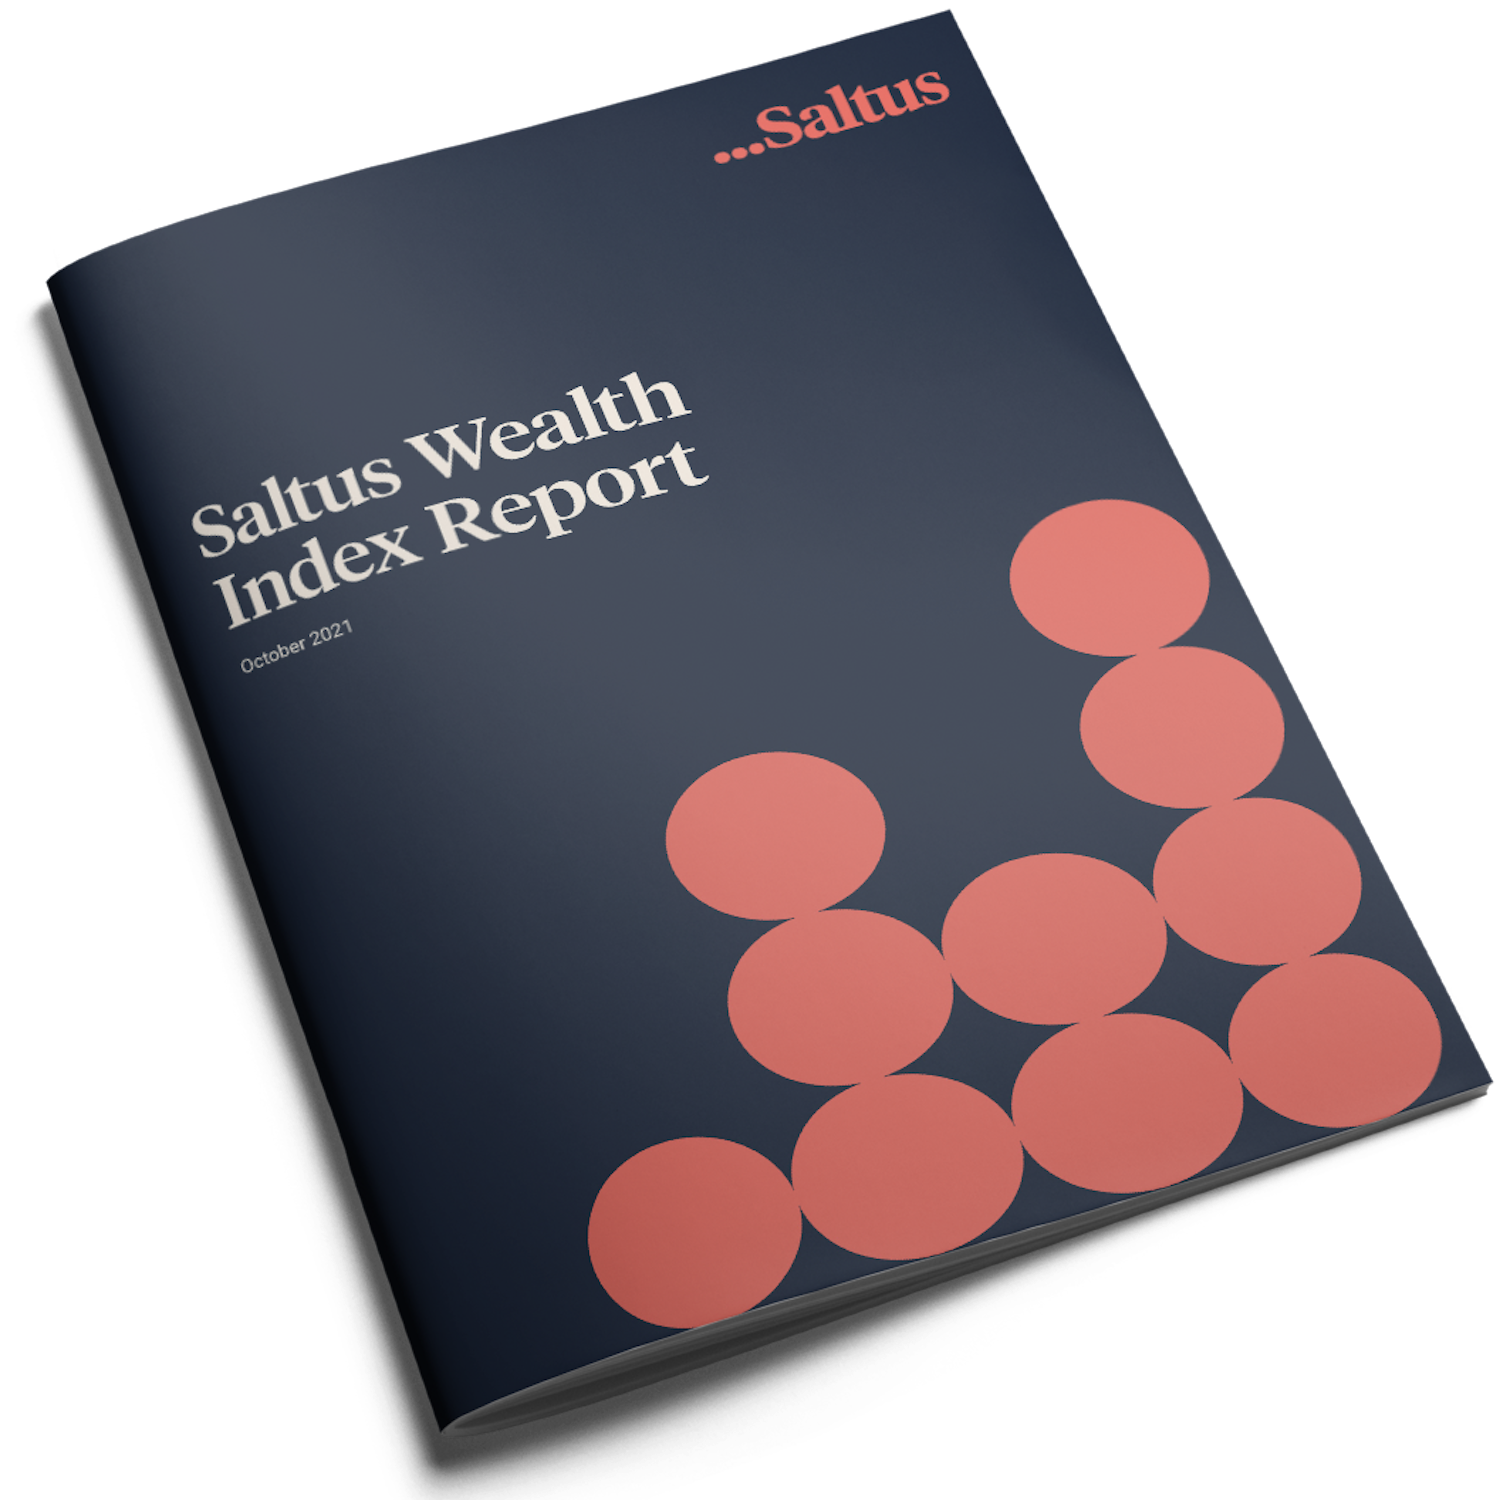 Saltus Wealth Index Report cover October 2021